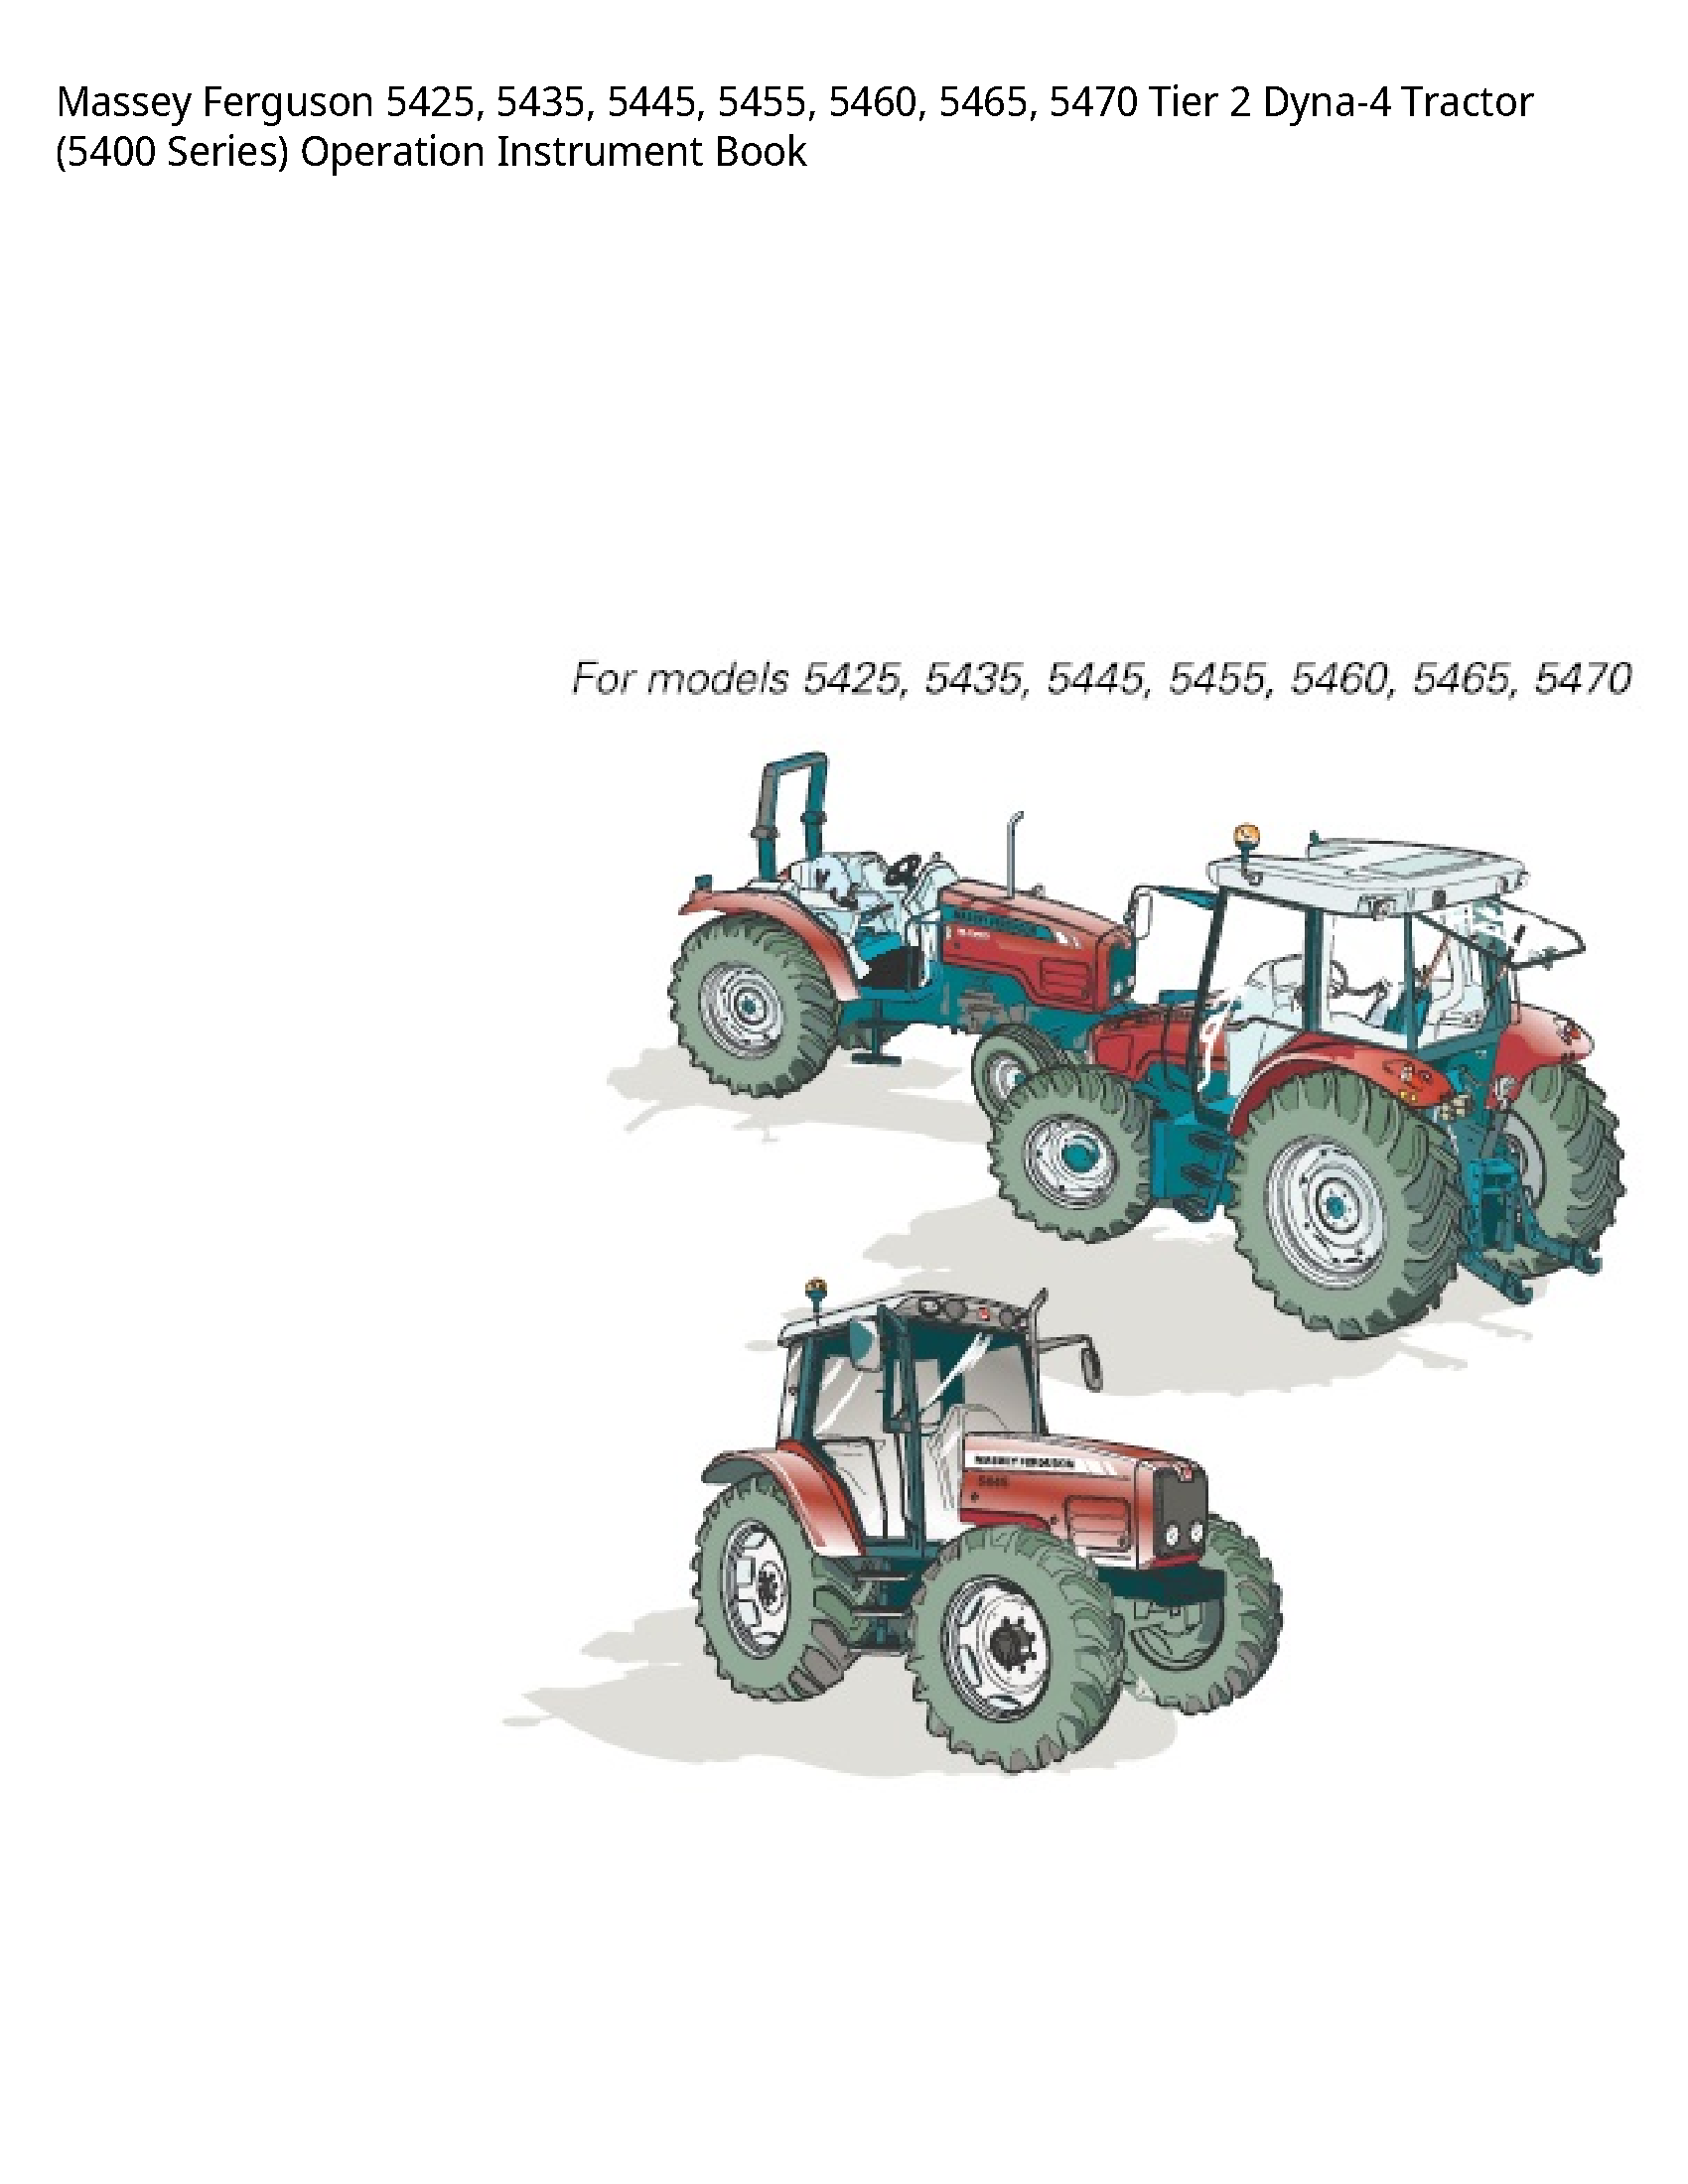 Massey Ferguson 5425 Tier Tractor Series) Operation Instrument Book manual